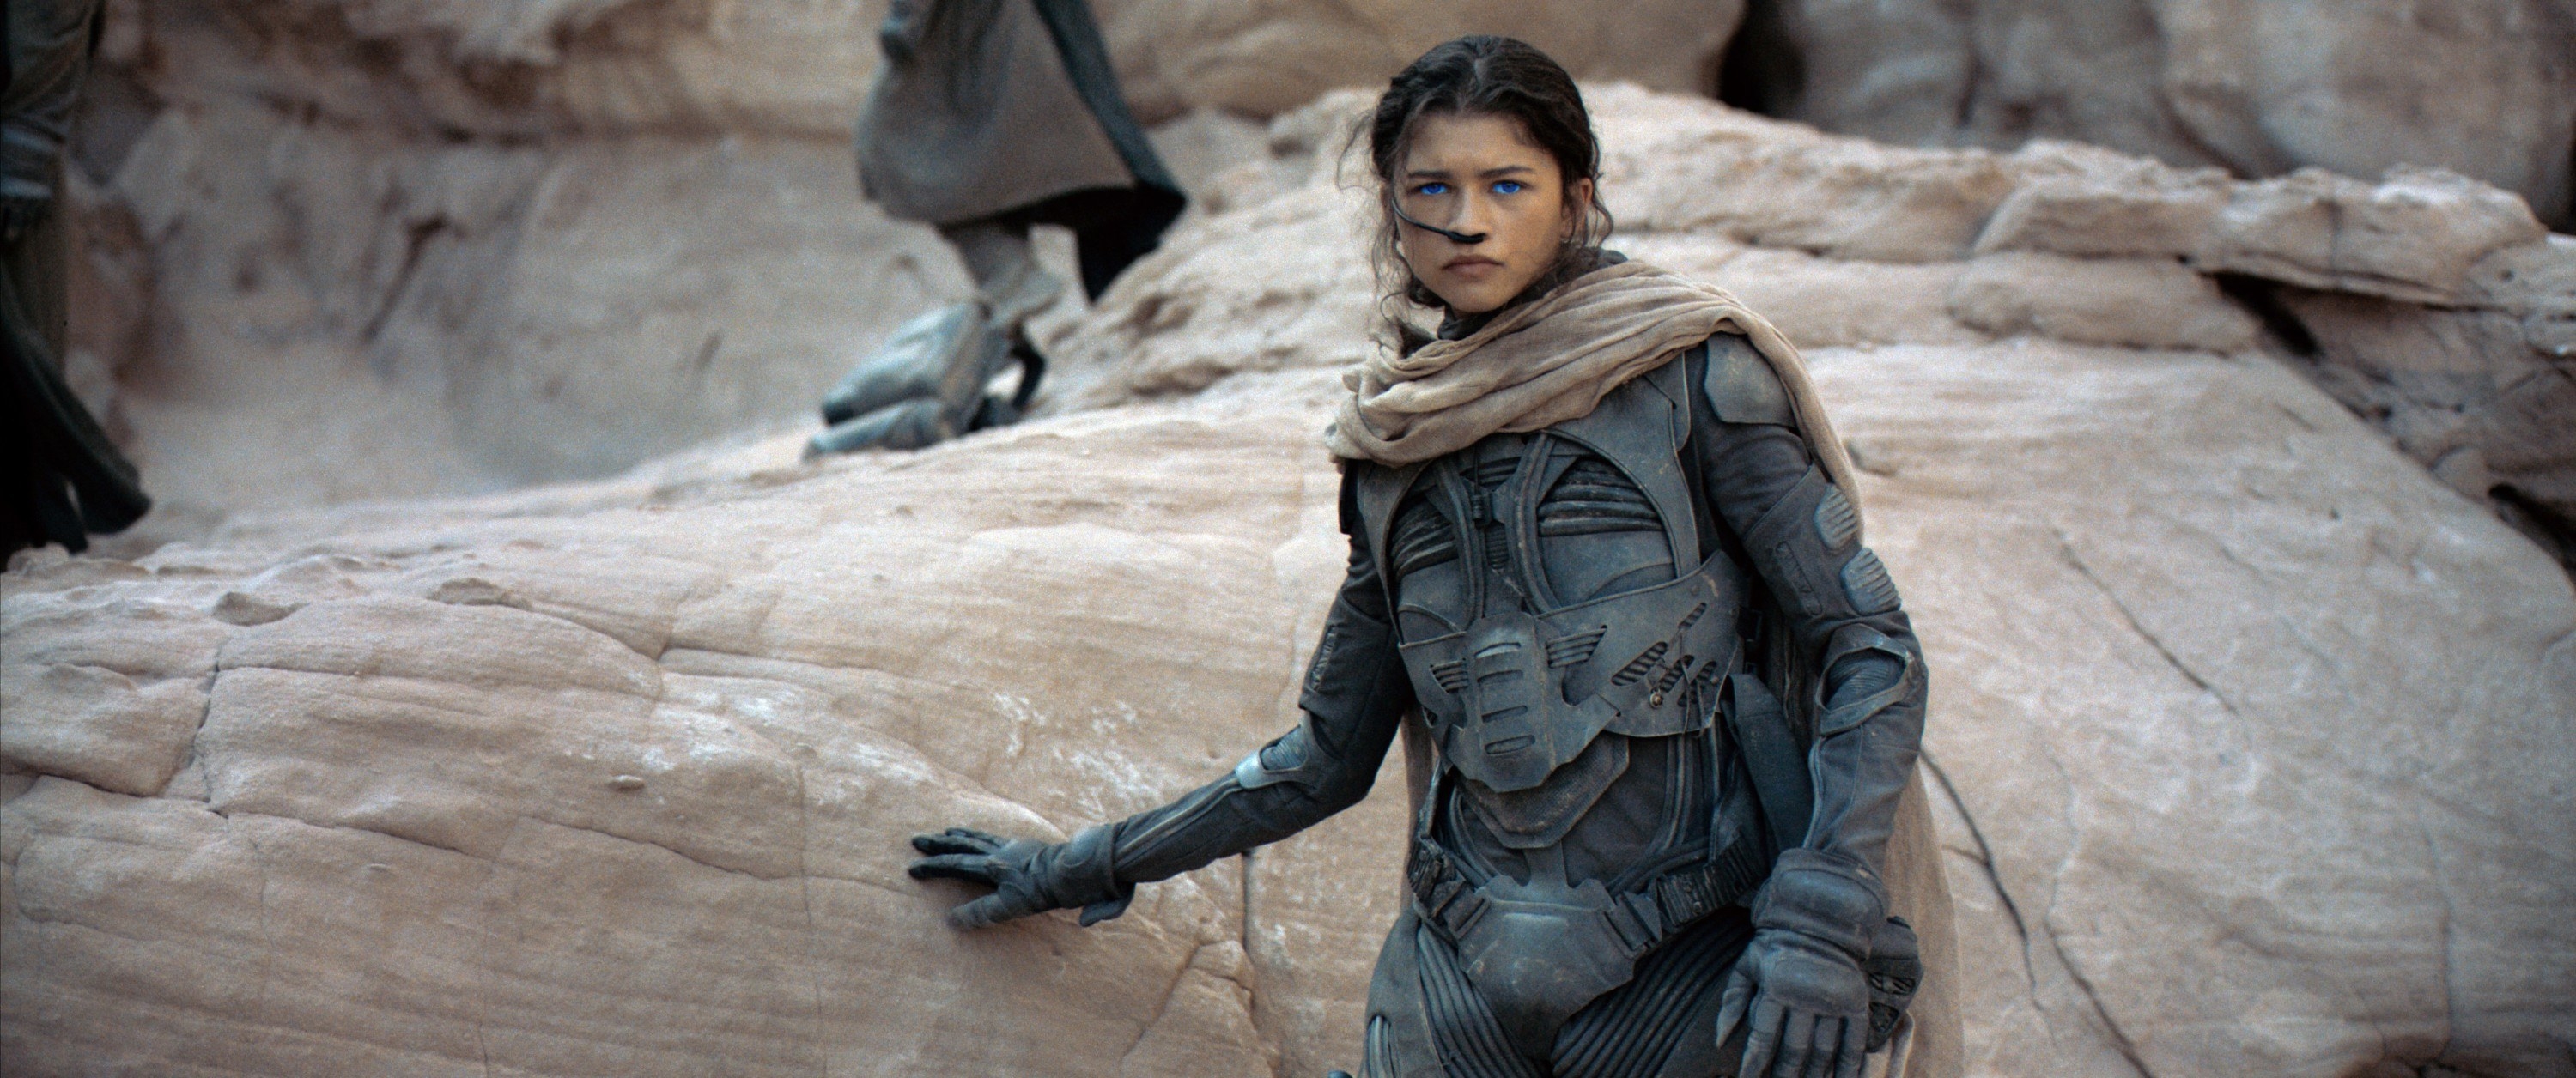 Zendaya as Chani, wearing a Fremen survival suit standing by some rocks